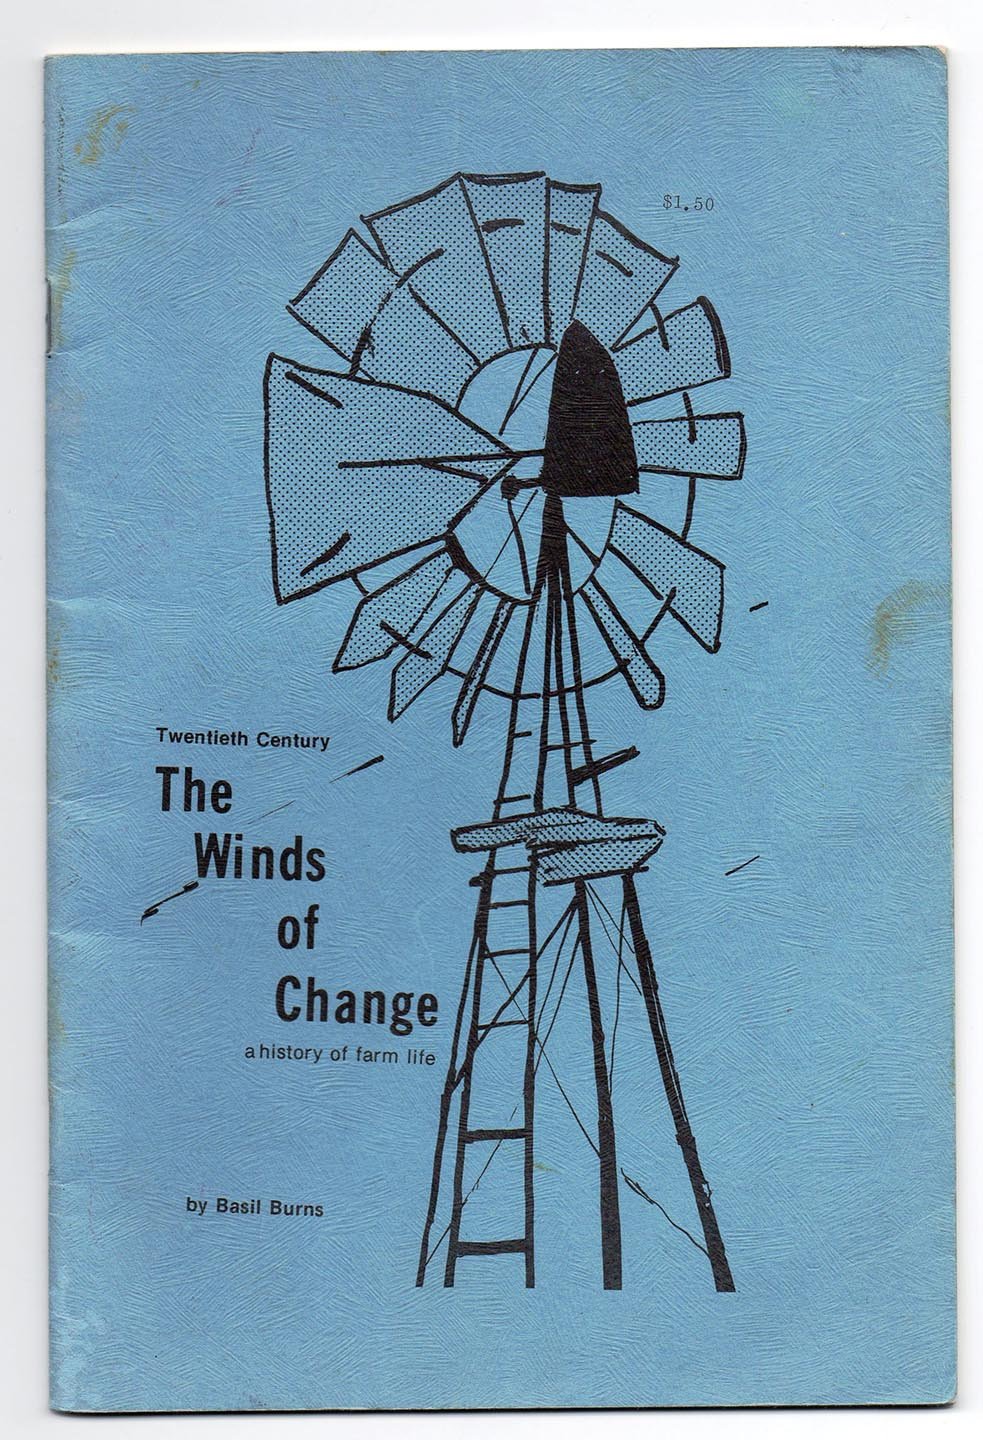 Twentieth Century. The Winds of Change: a history of farm life